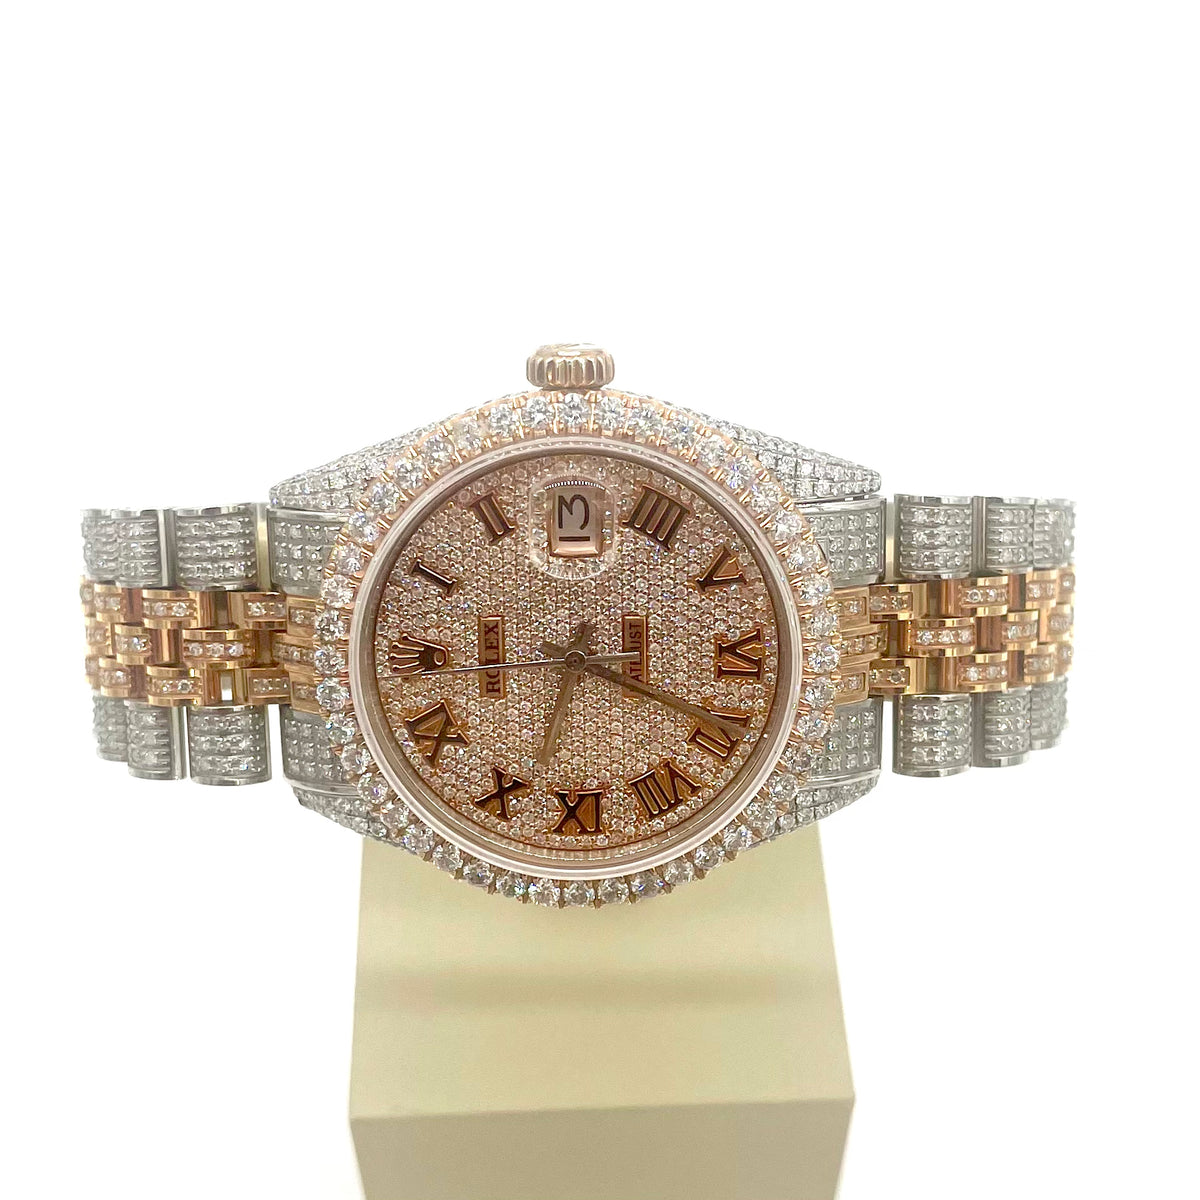 Rolex 1601 Date Just Full setting diamonds (Serial # 2383872 )